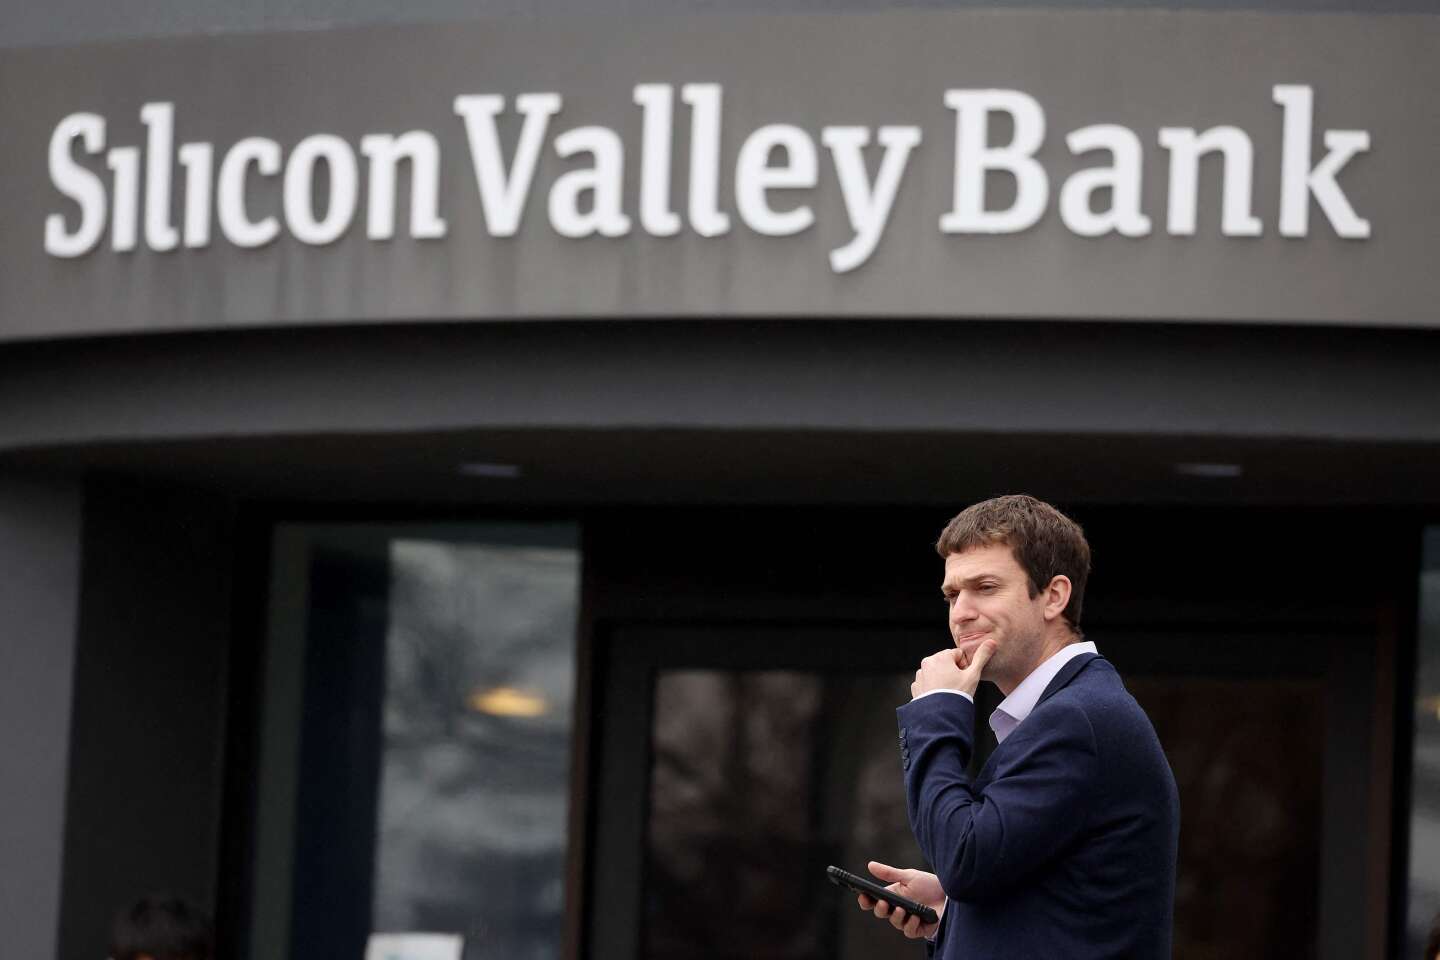 Silicon Valley Bank shutdown marks biggest bank failure since 2008 crisis